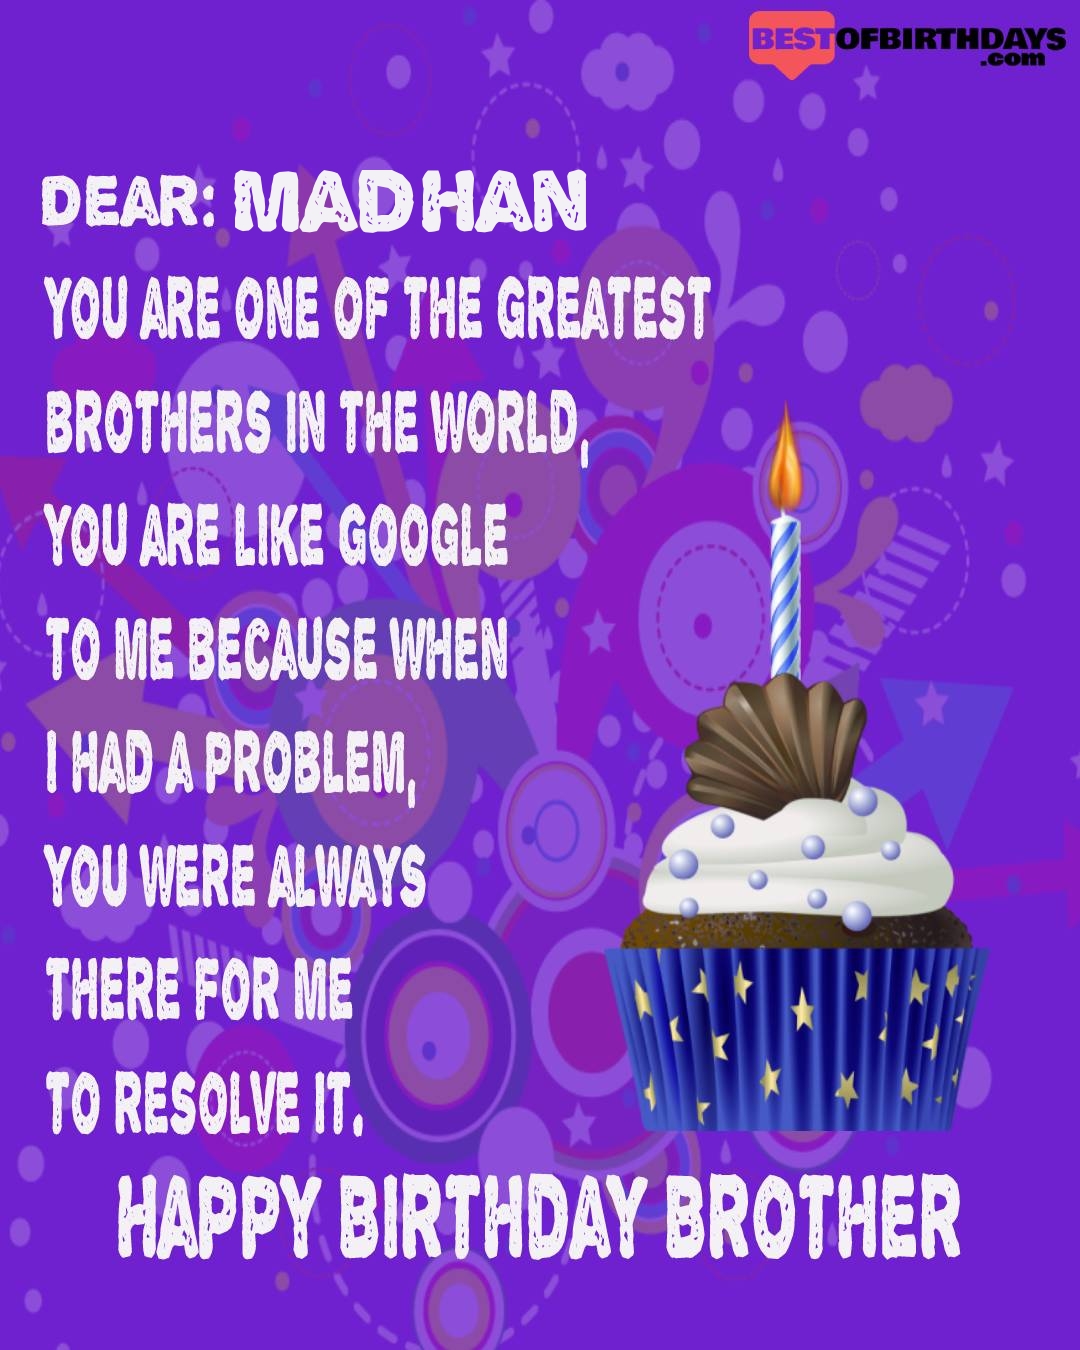 Happy birthday madhan bhai brother bro